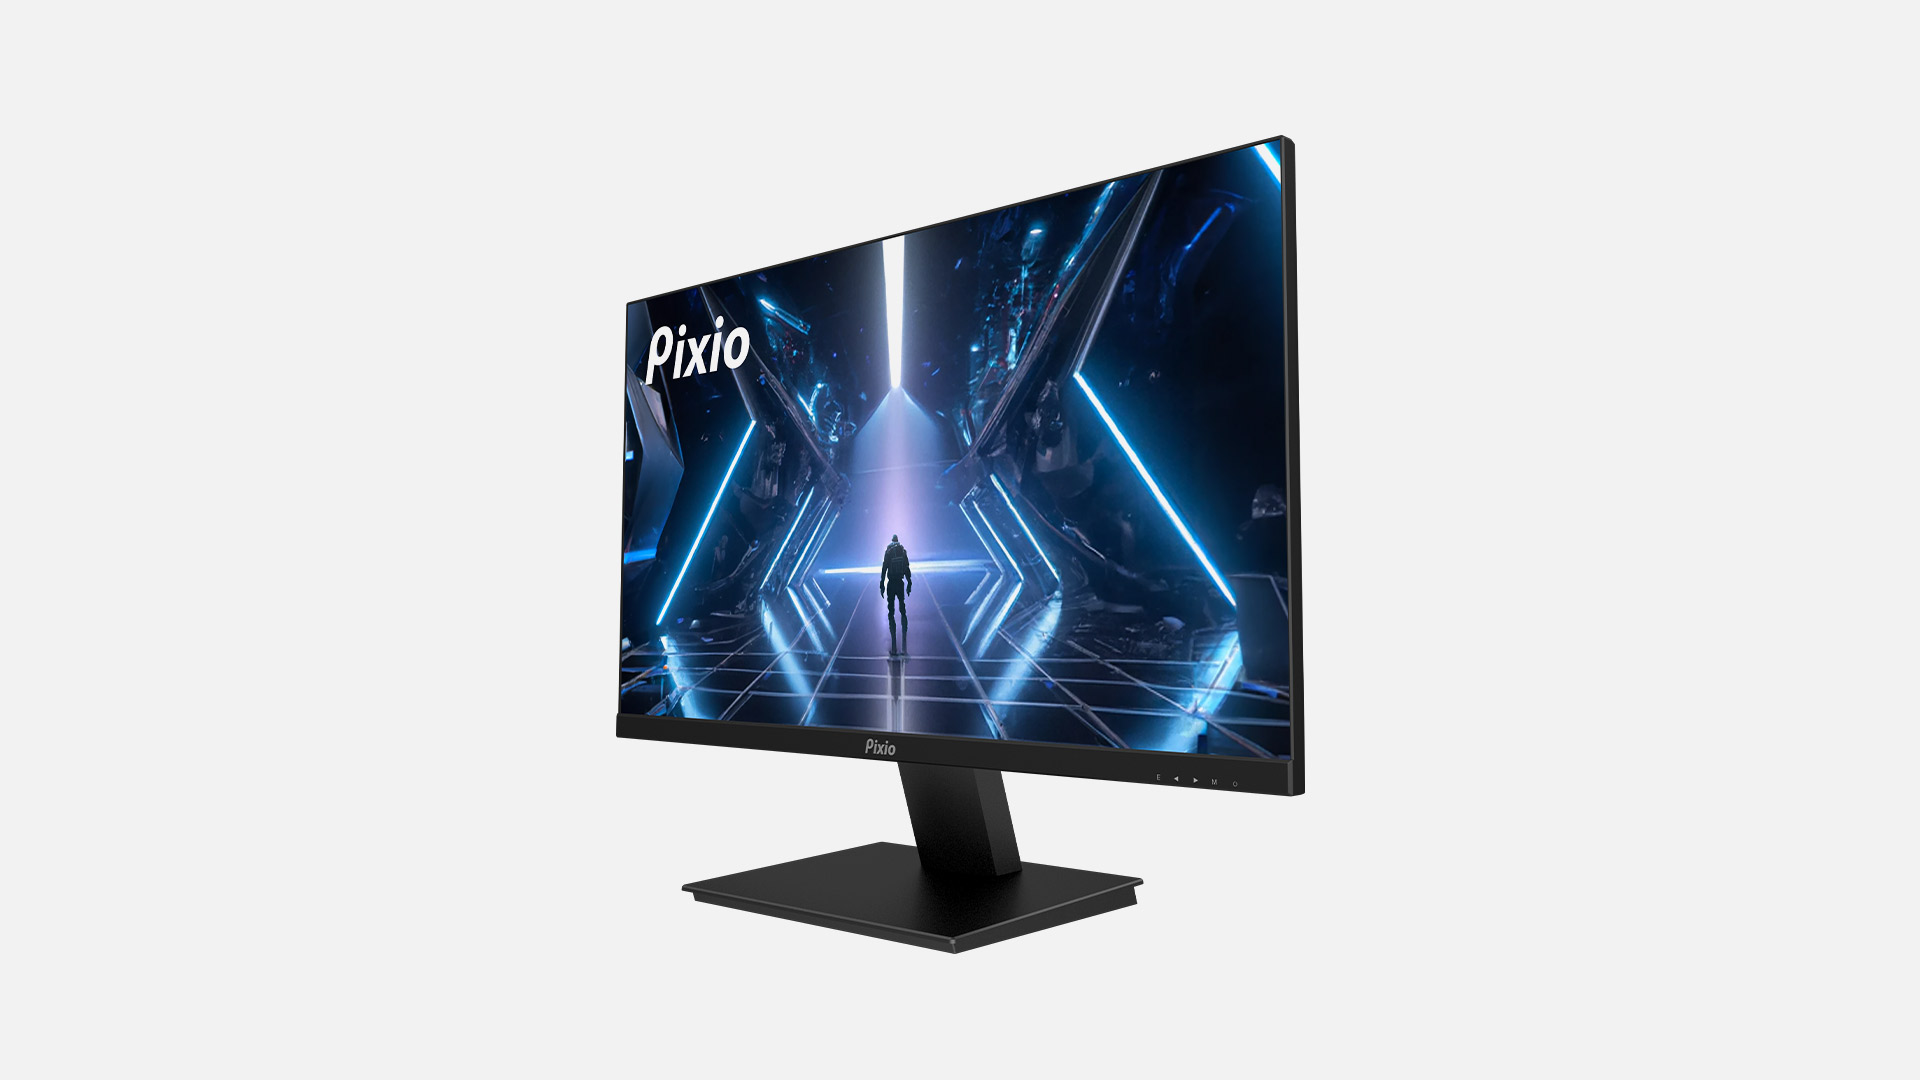 Pixio PX259 Prime S  25 inch 1080p 360Hz 1 ms IPS eSports Gaming